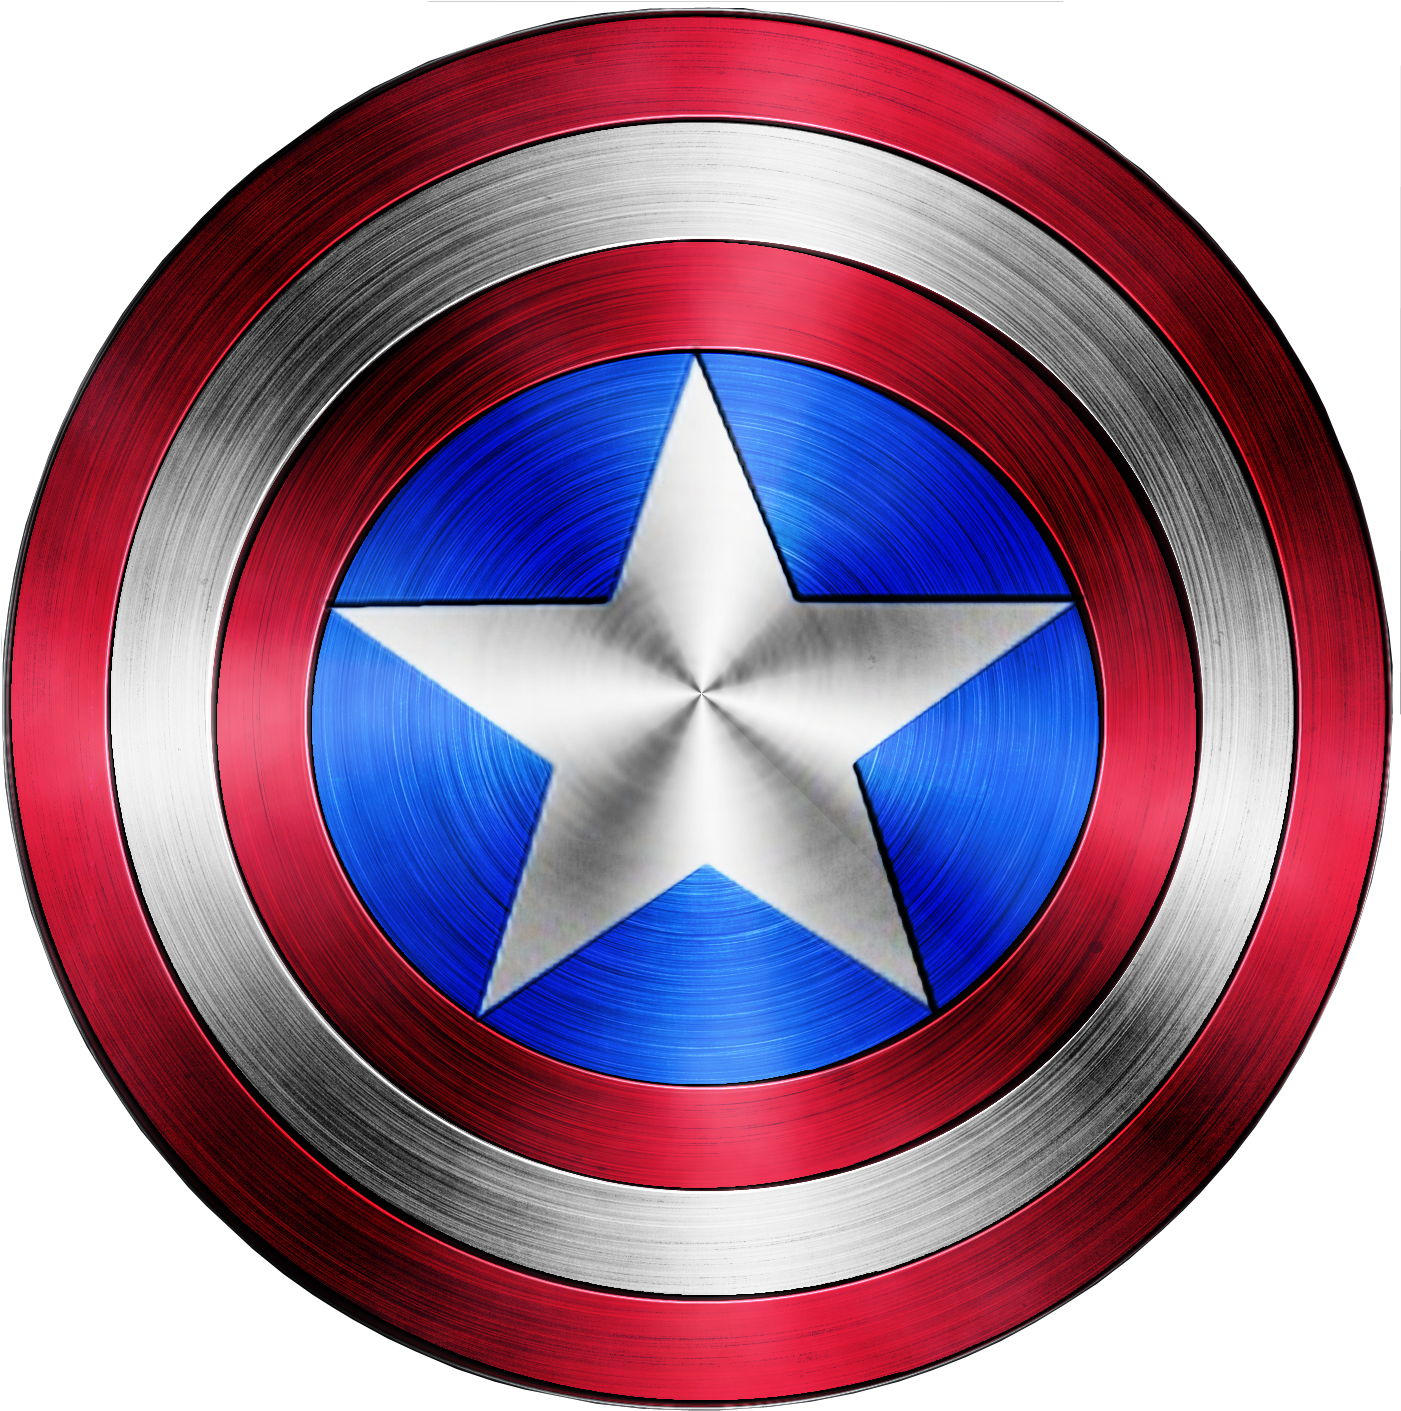 Download Captain America Shield Logo Png Royalty Free Captain America Shield Jpg Png Image With No Background Pngkey Com